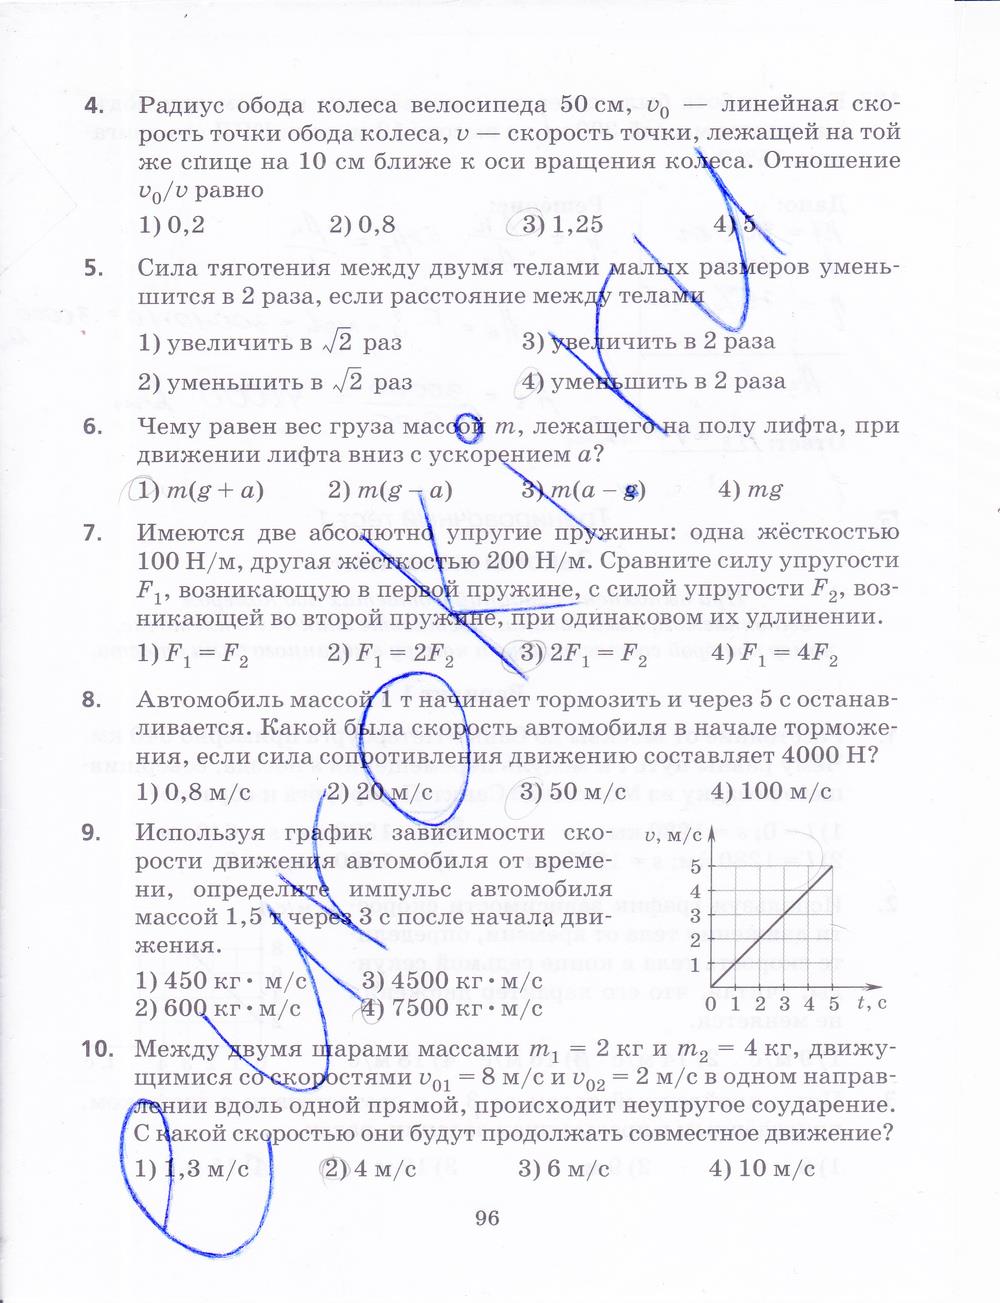 гдз 9 класс рабочая тетрадь страница 96 физика Пурышева, Важеевская, Чаругин